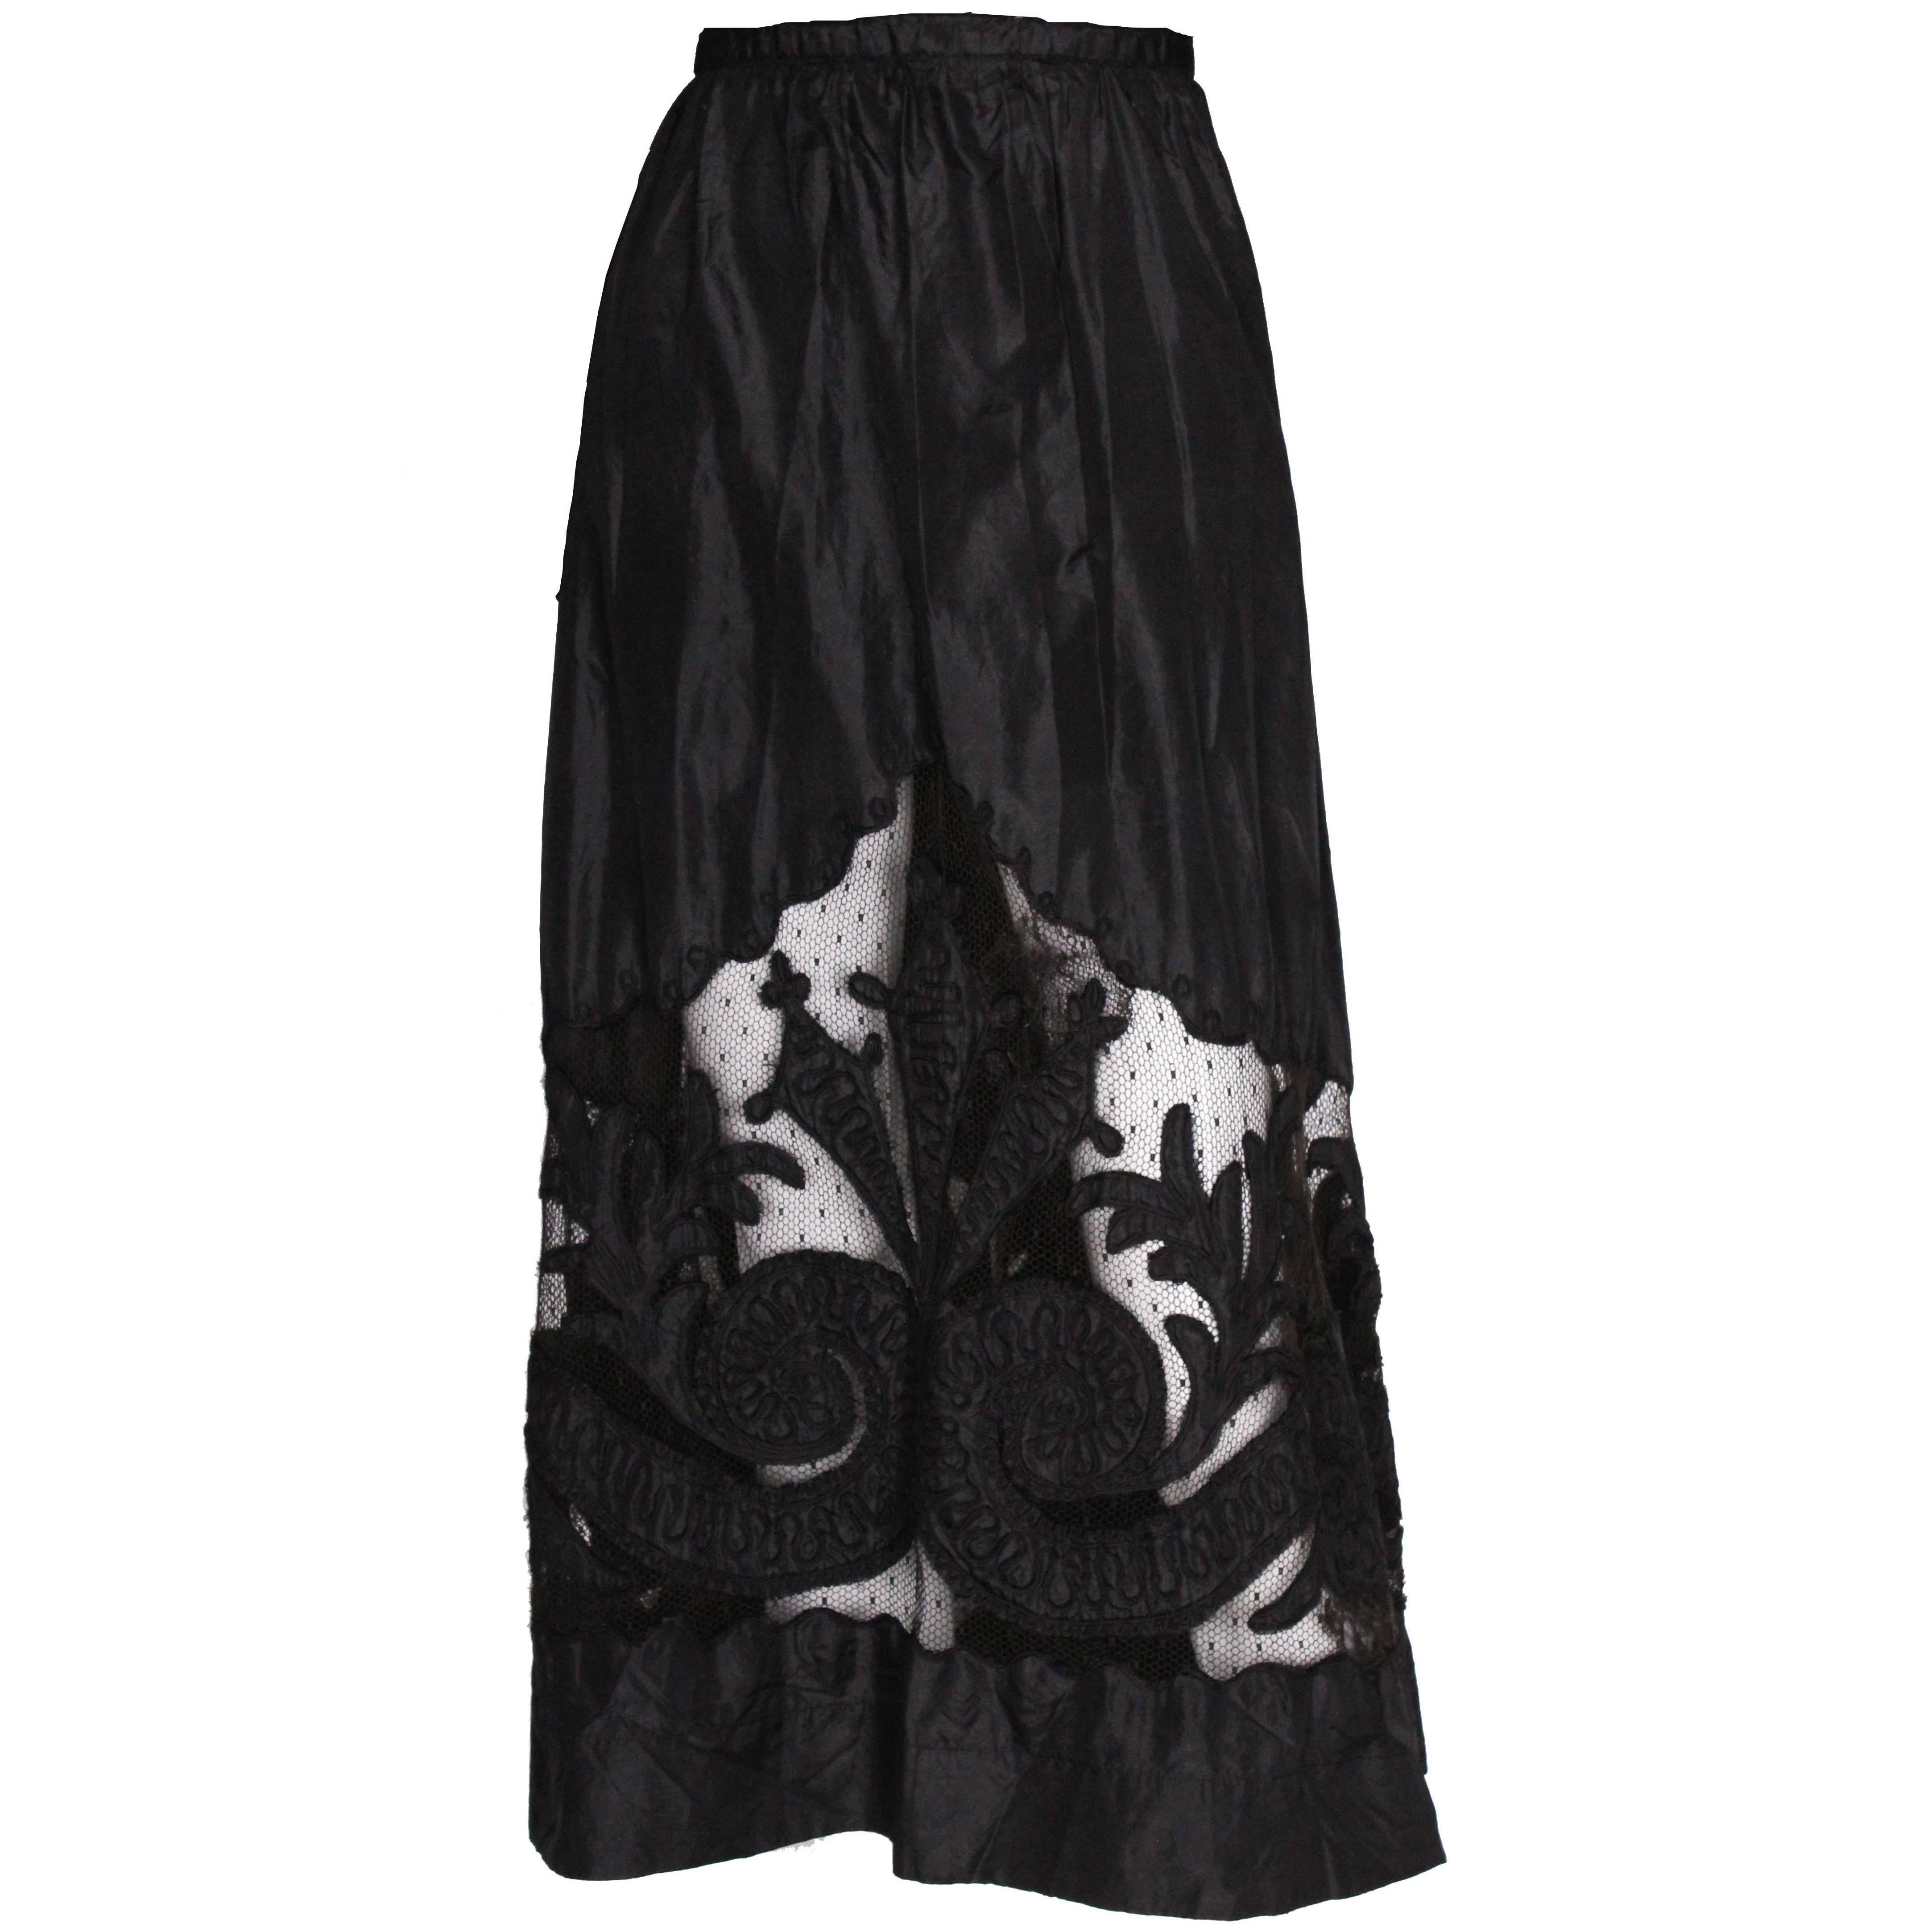 Edwardian Silk & Net Embroidered Black Skirt